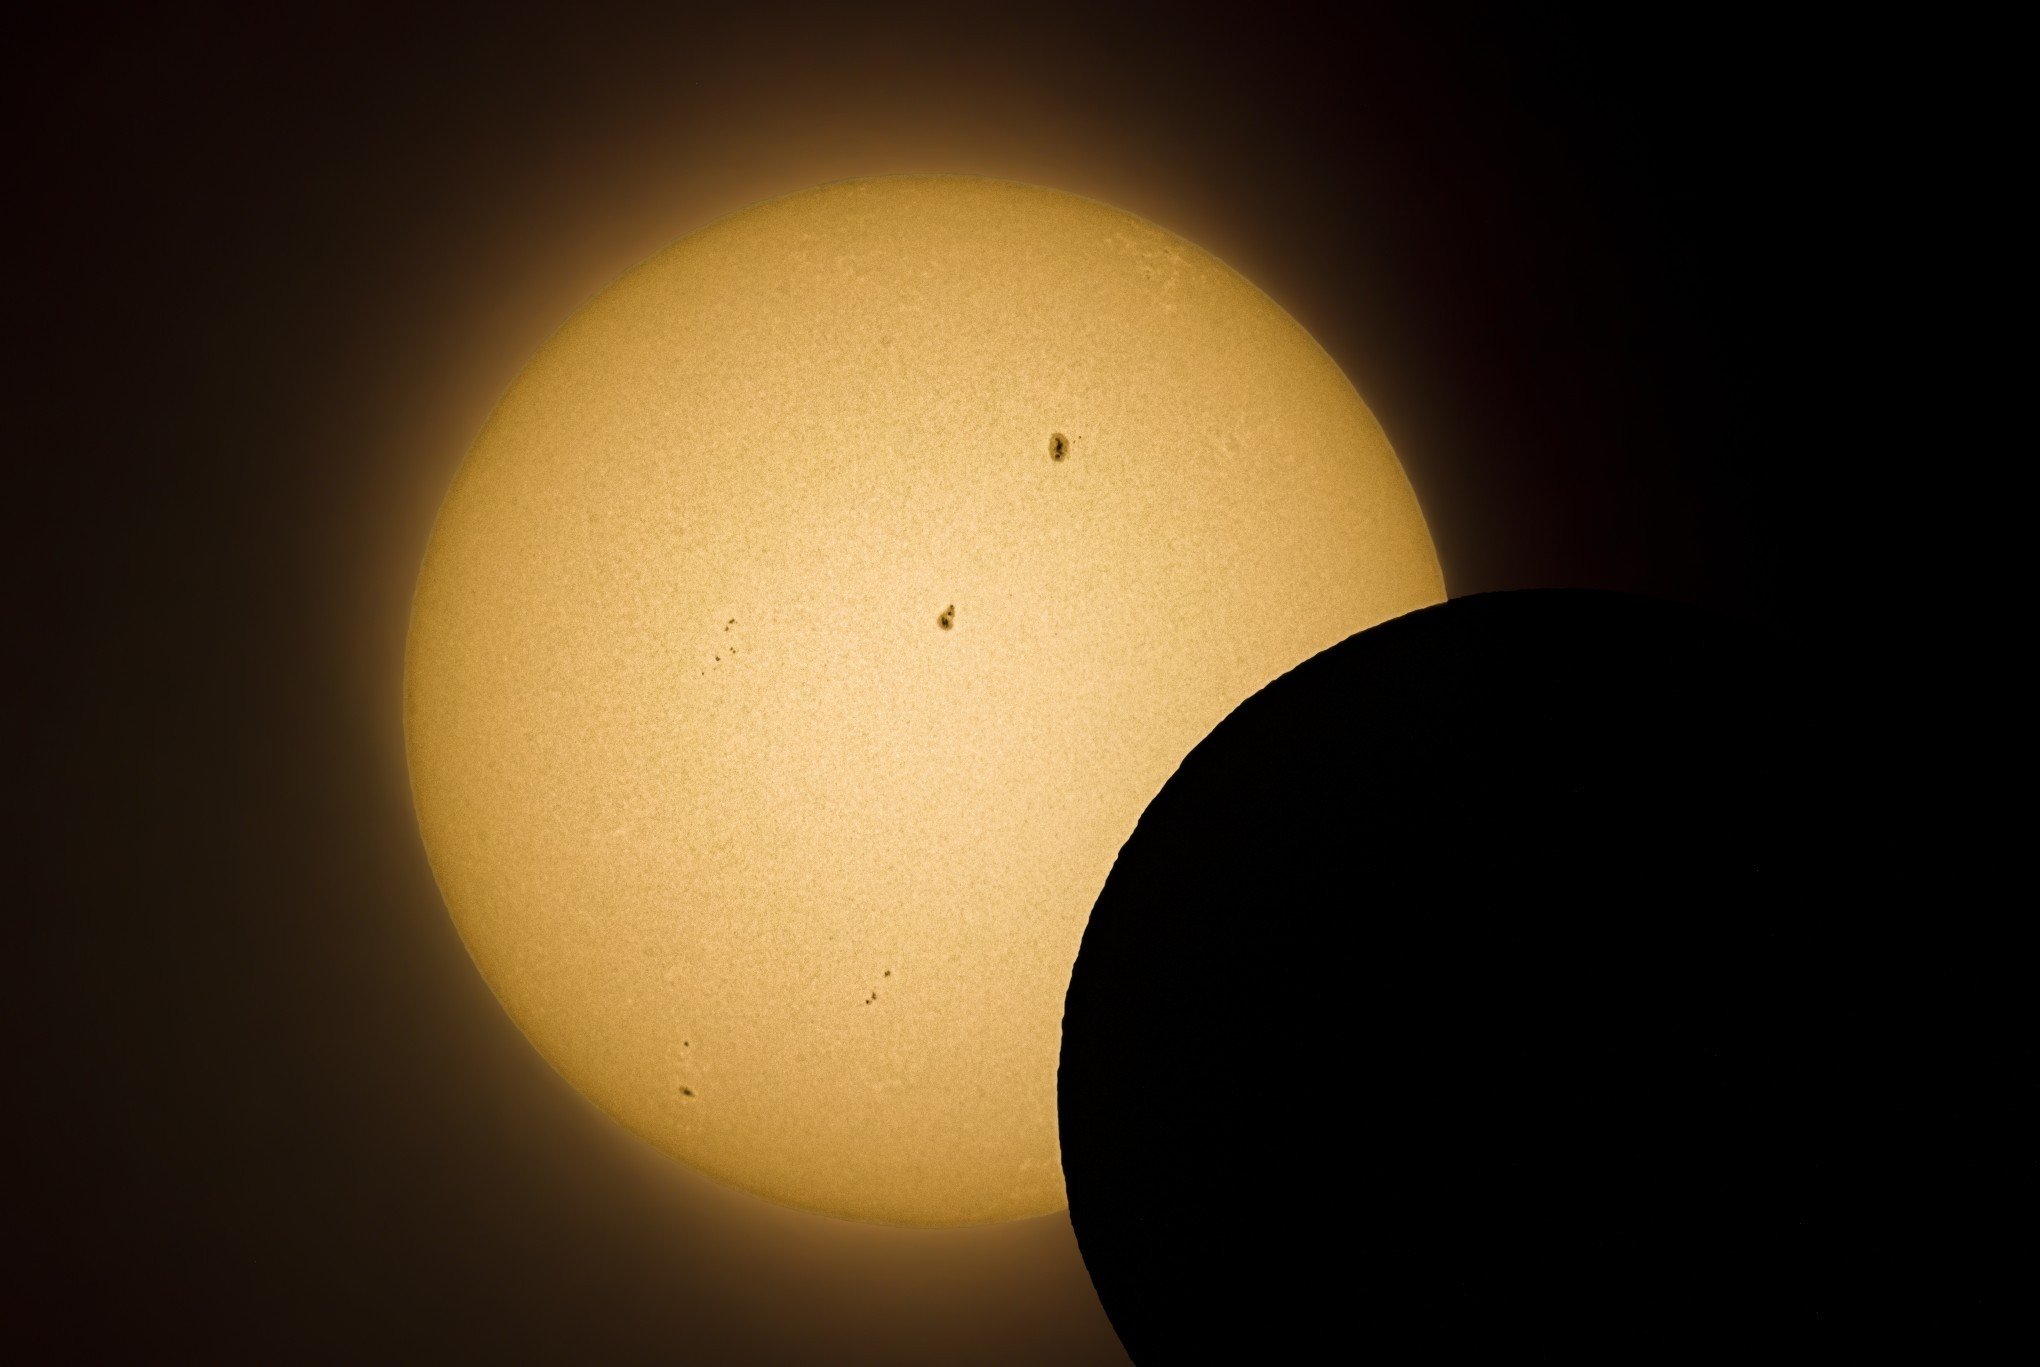 FOTOS: É fantástico! Eclipse solar, anéis de urano e Cometa Halley, confira imagens dos fenômenos astronômicos de 2023